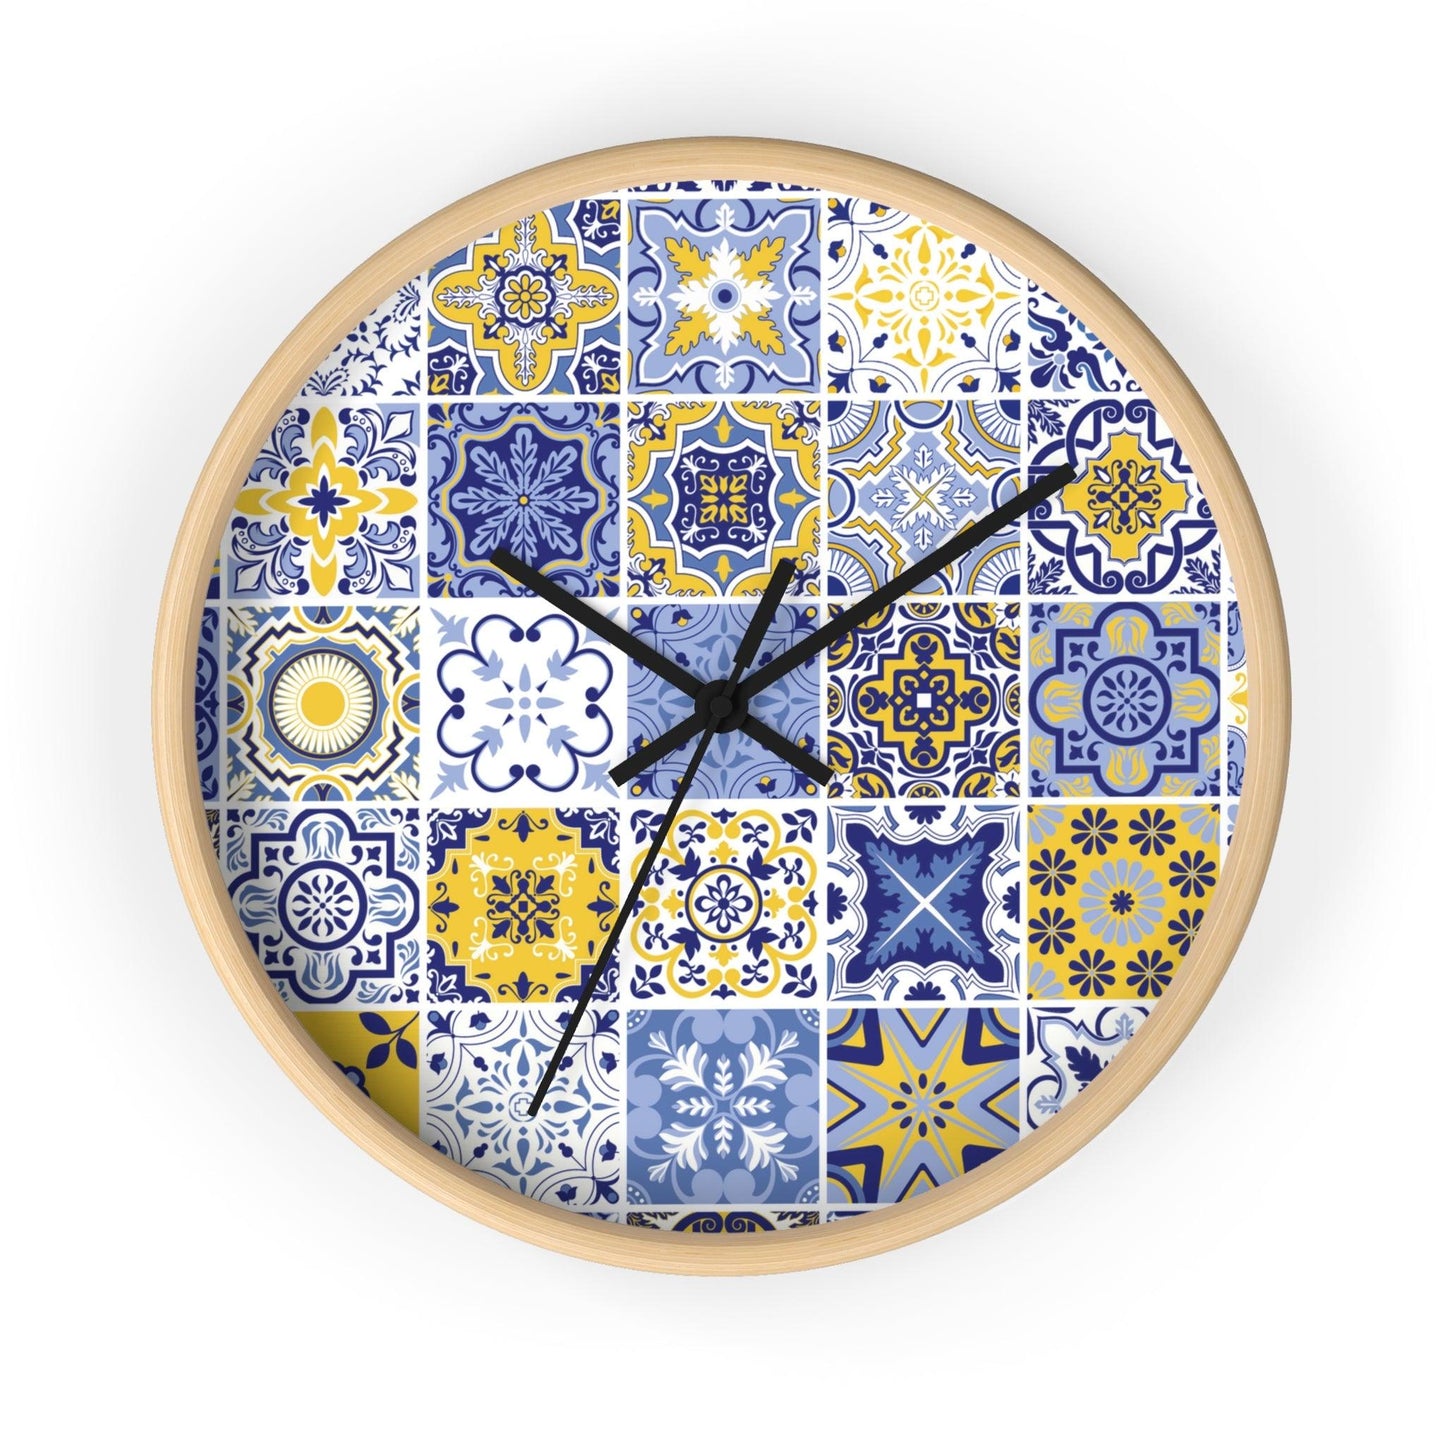 Sicilian Tile Wall Clock - The Global Wanderer